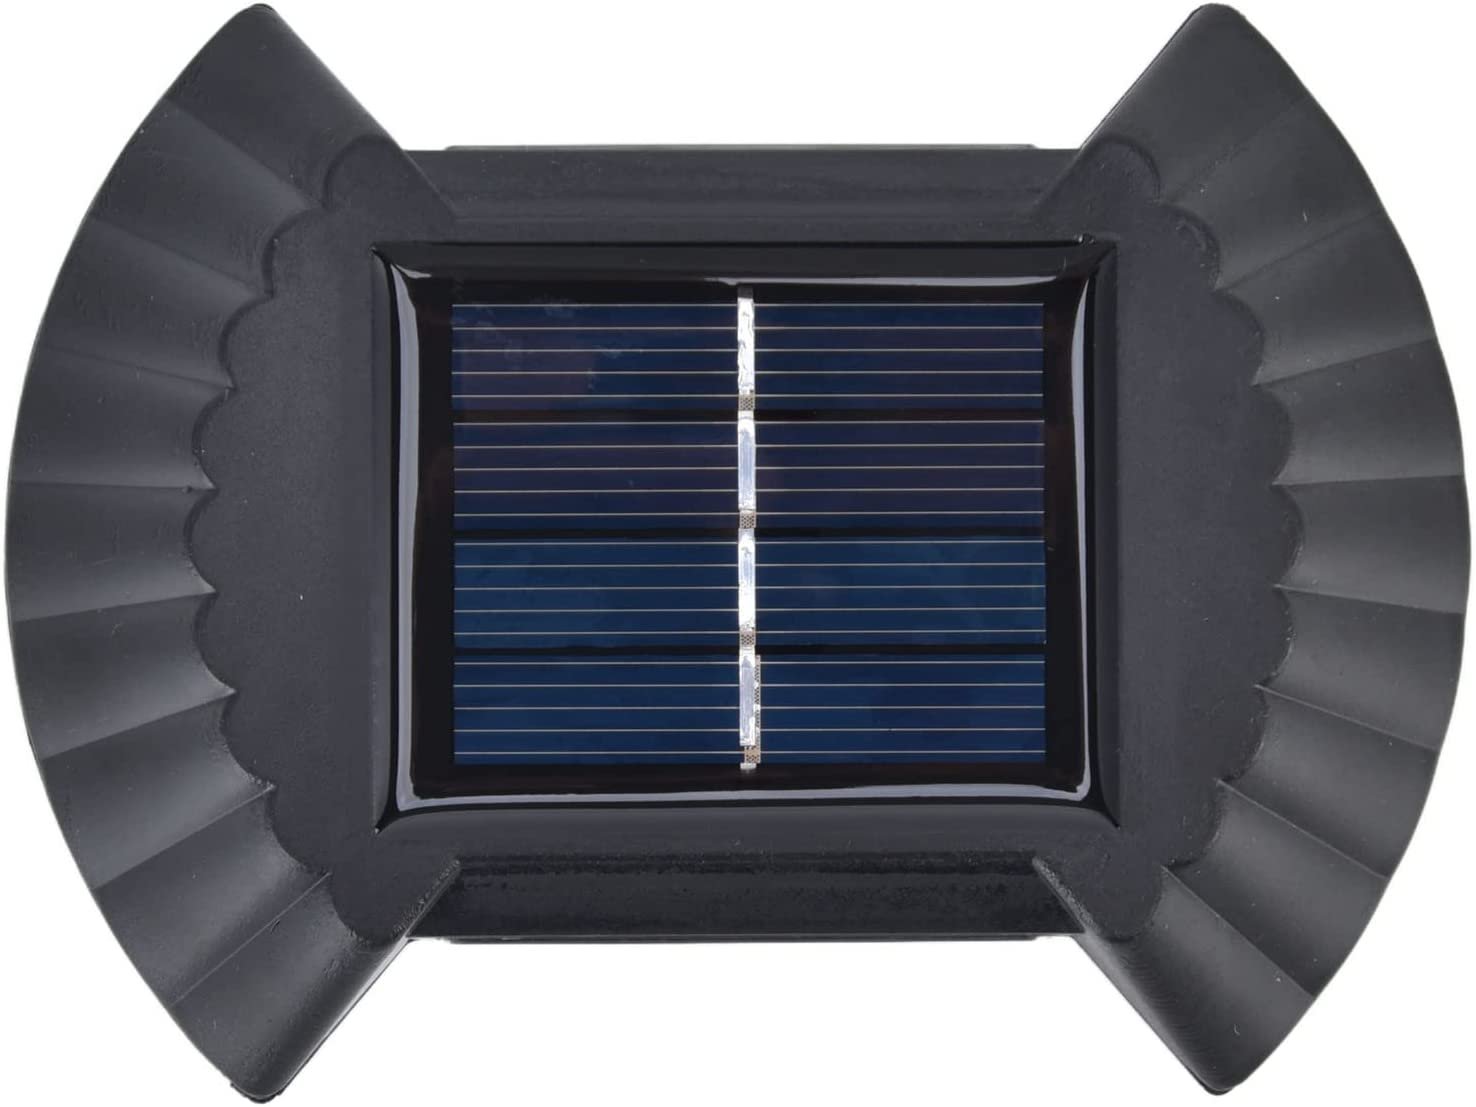 Luminaria Solar Led Parede Arandela Kit 4 Uni Resistente Spot Balizador Enfeite Escada Quintal - 11